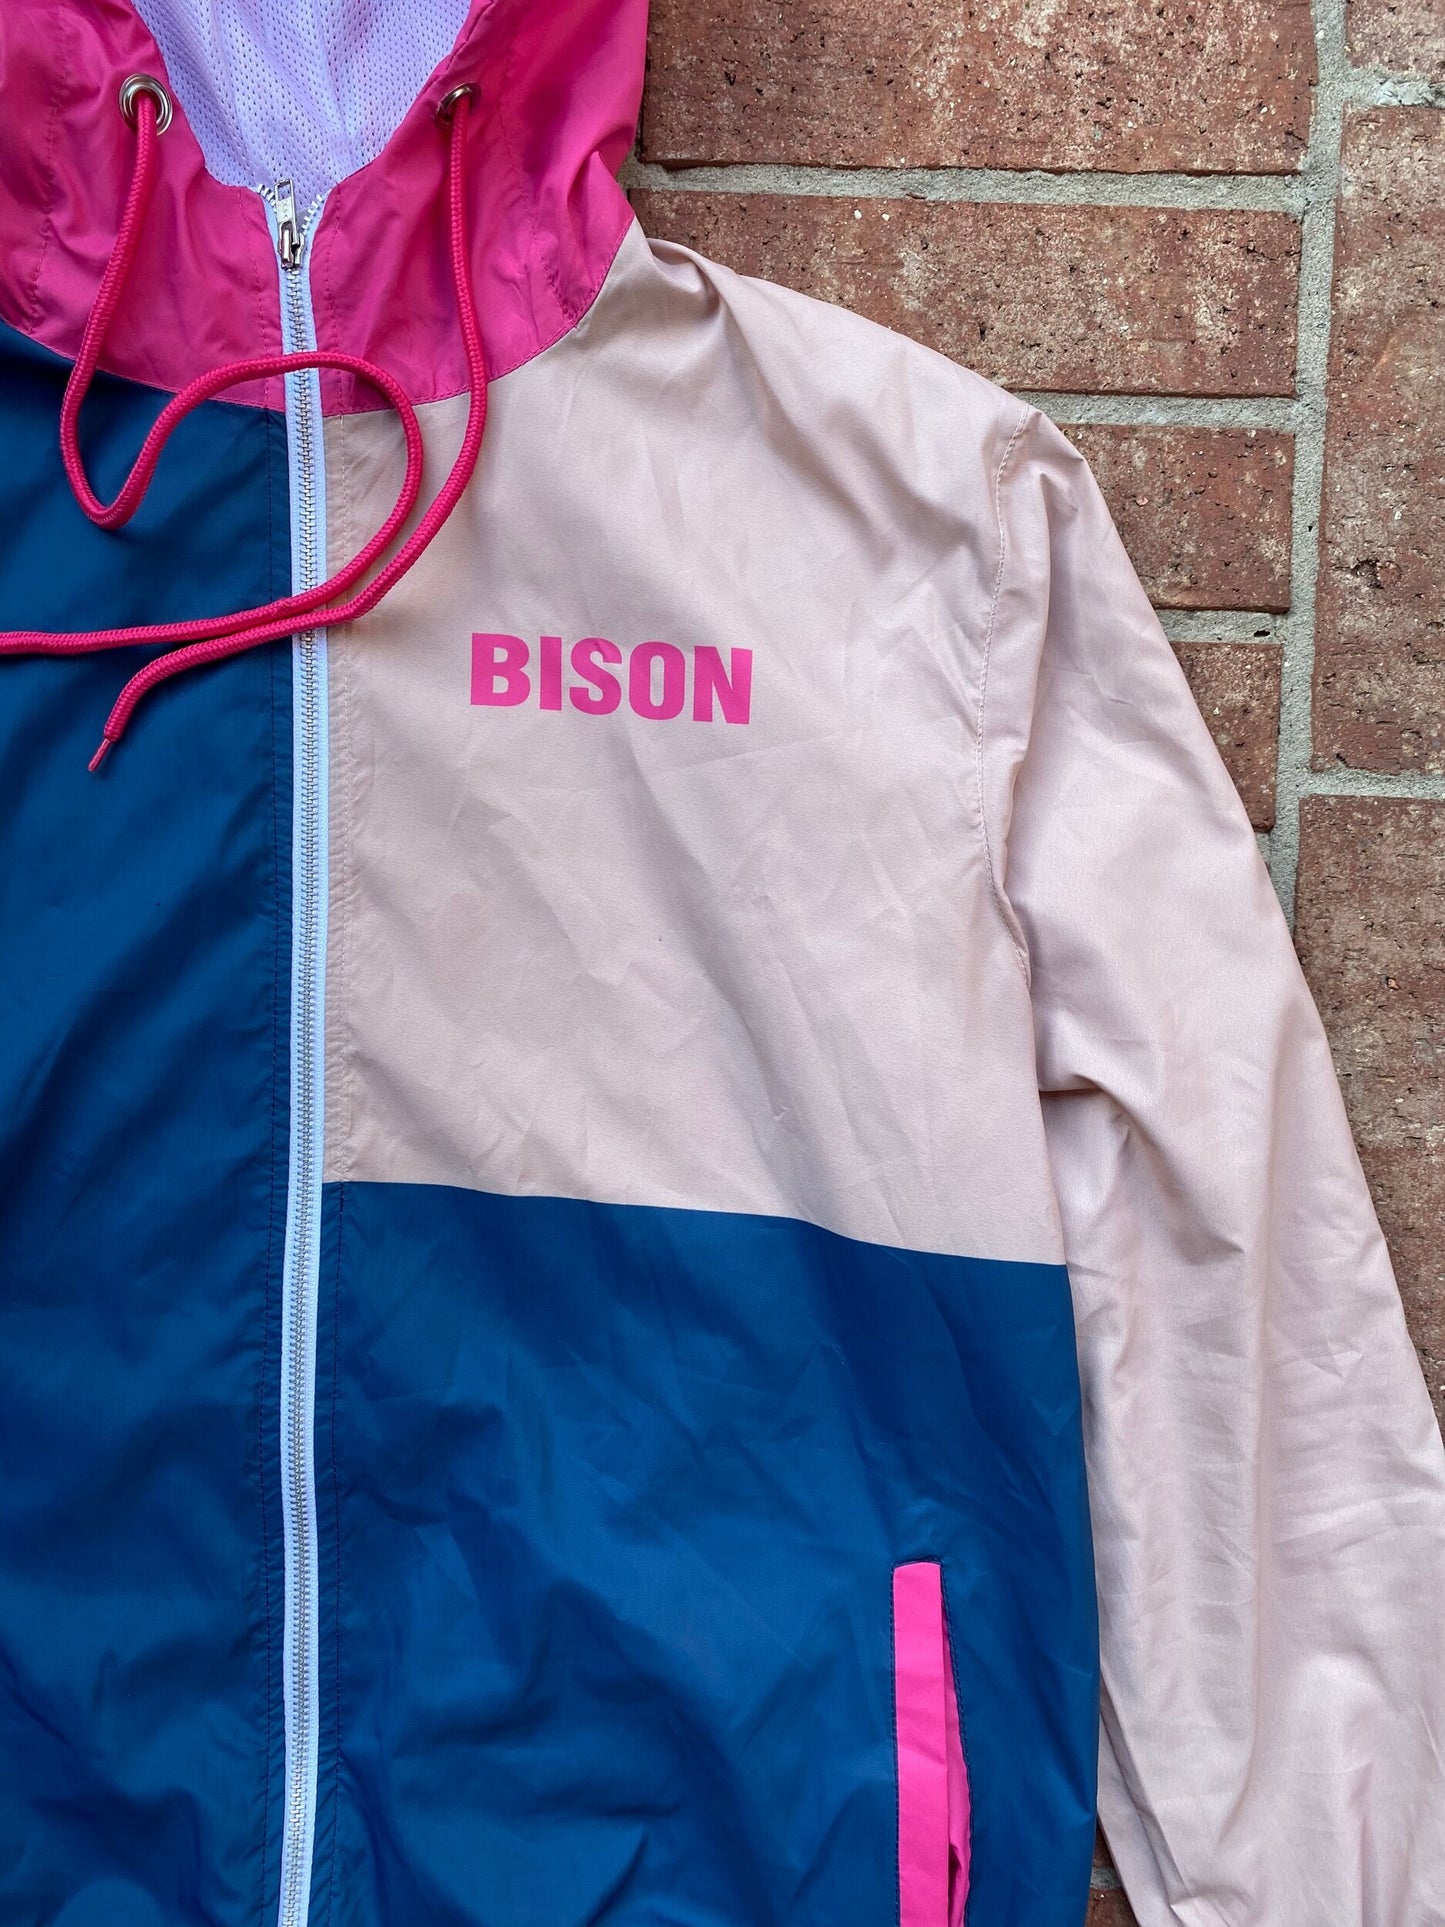 BISON City Bubble Gum Jacket – A Herd of Bison